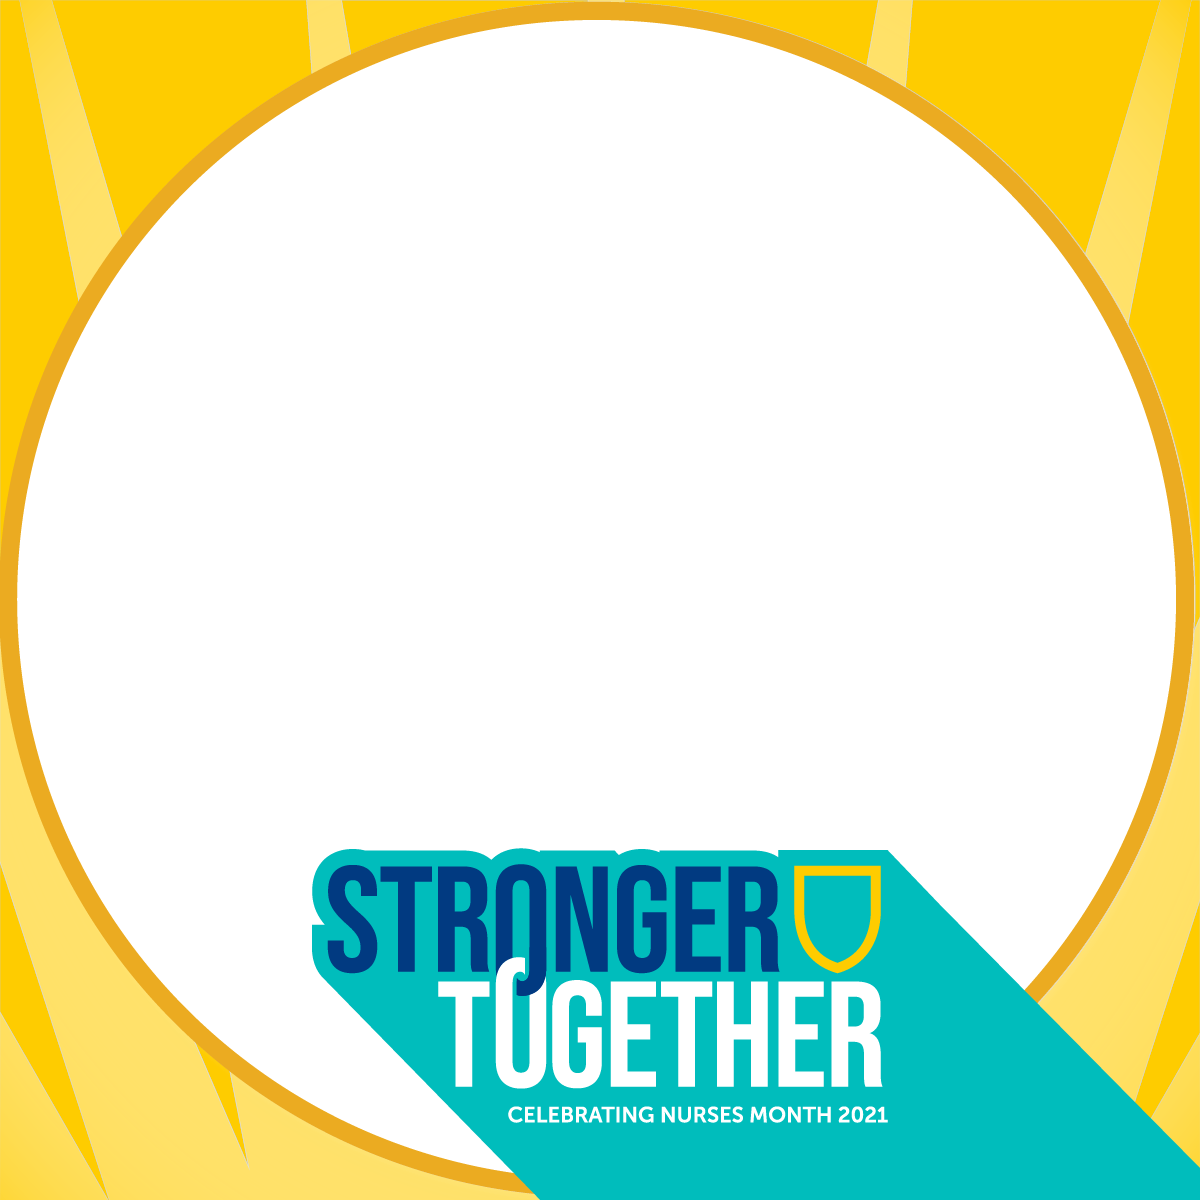 "Stronger together: Celebrating nurses month 2021" yellow circle